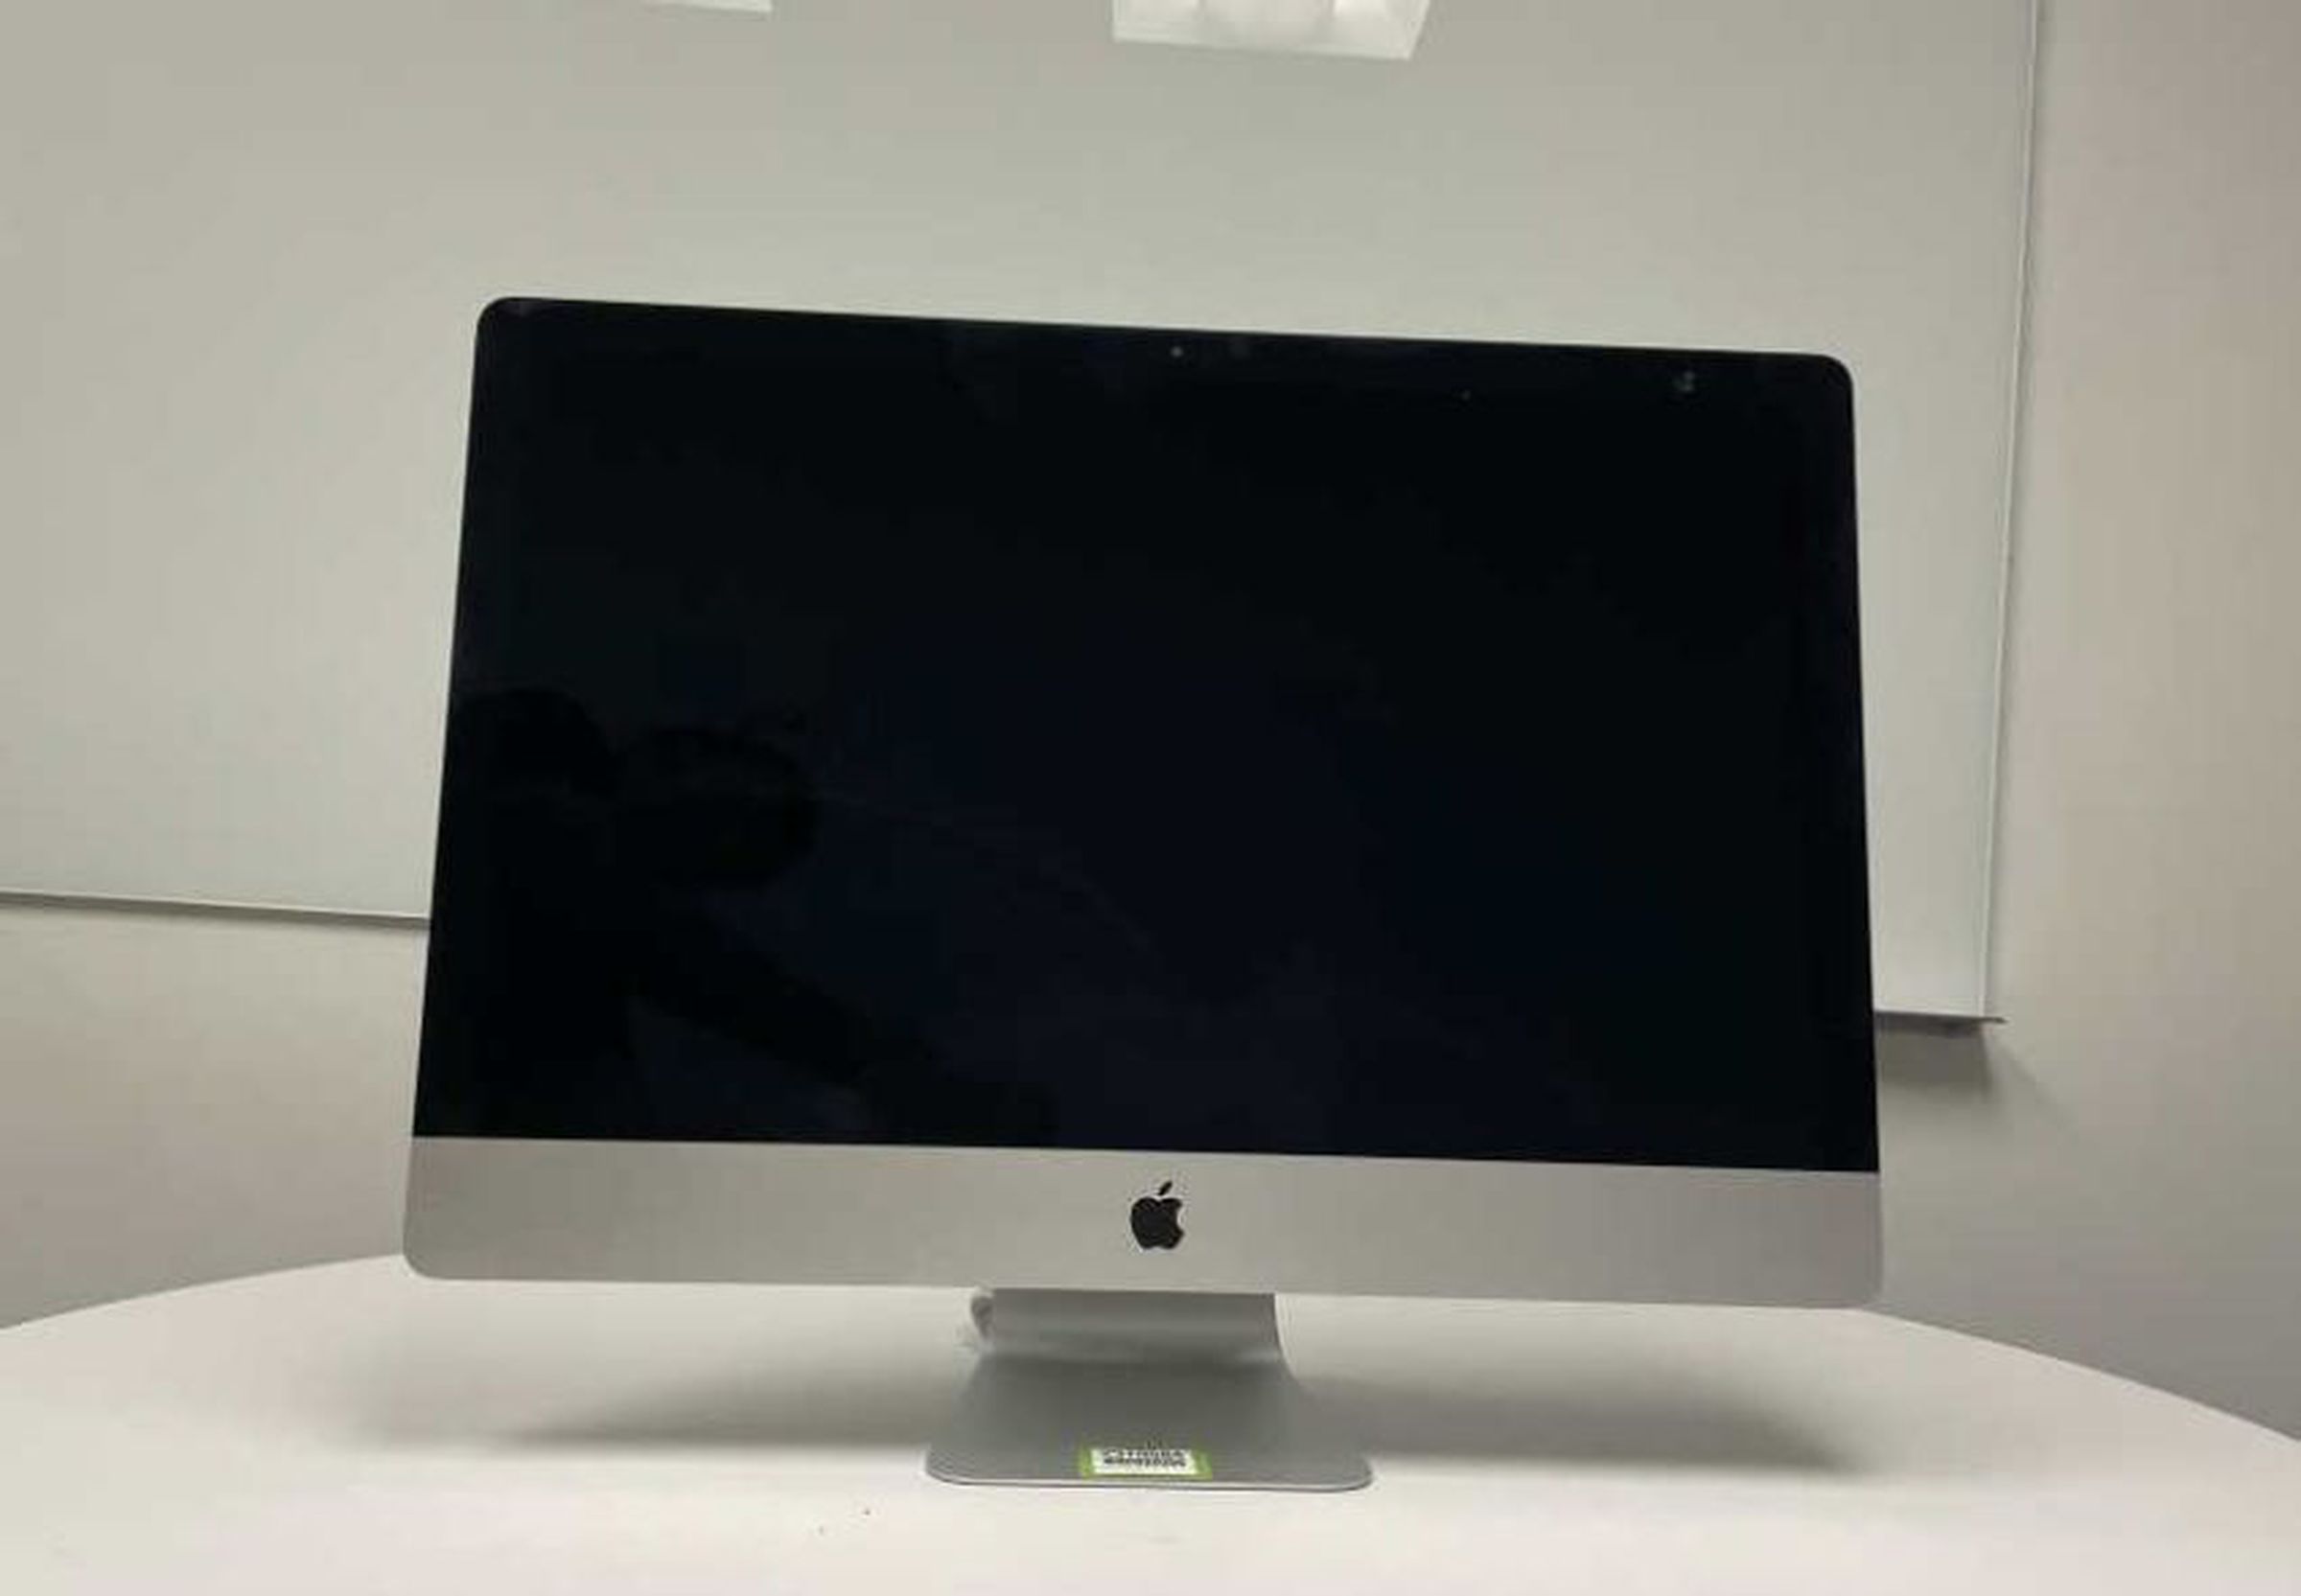 Apple iMac desktop computer from 2013.